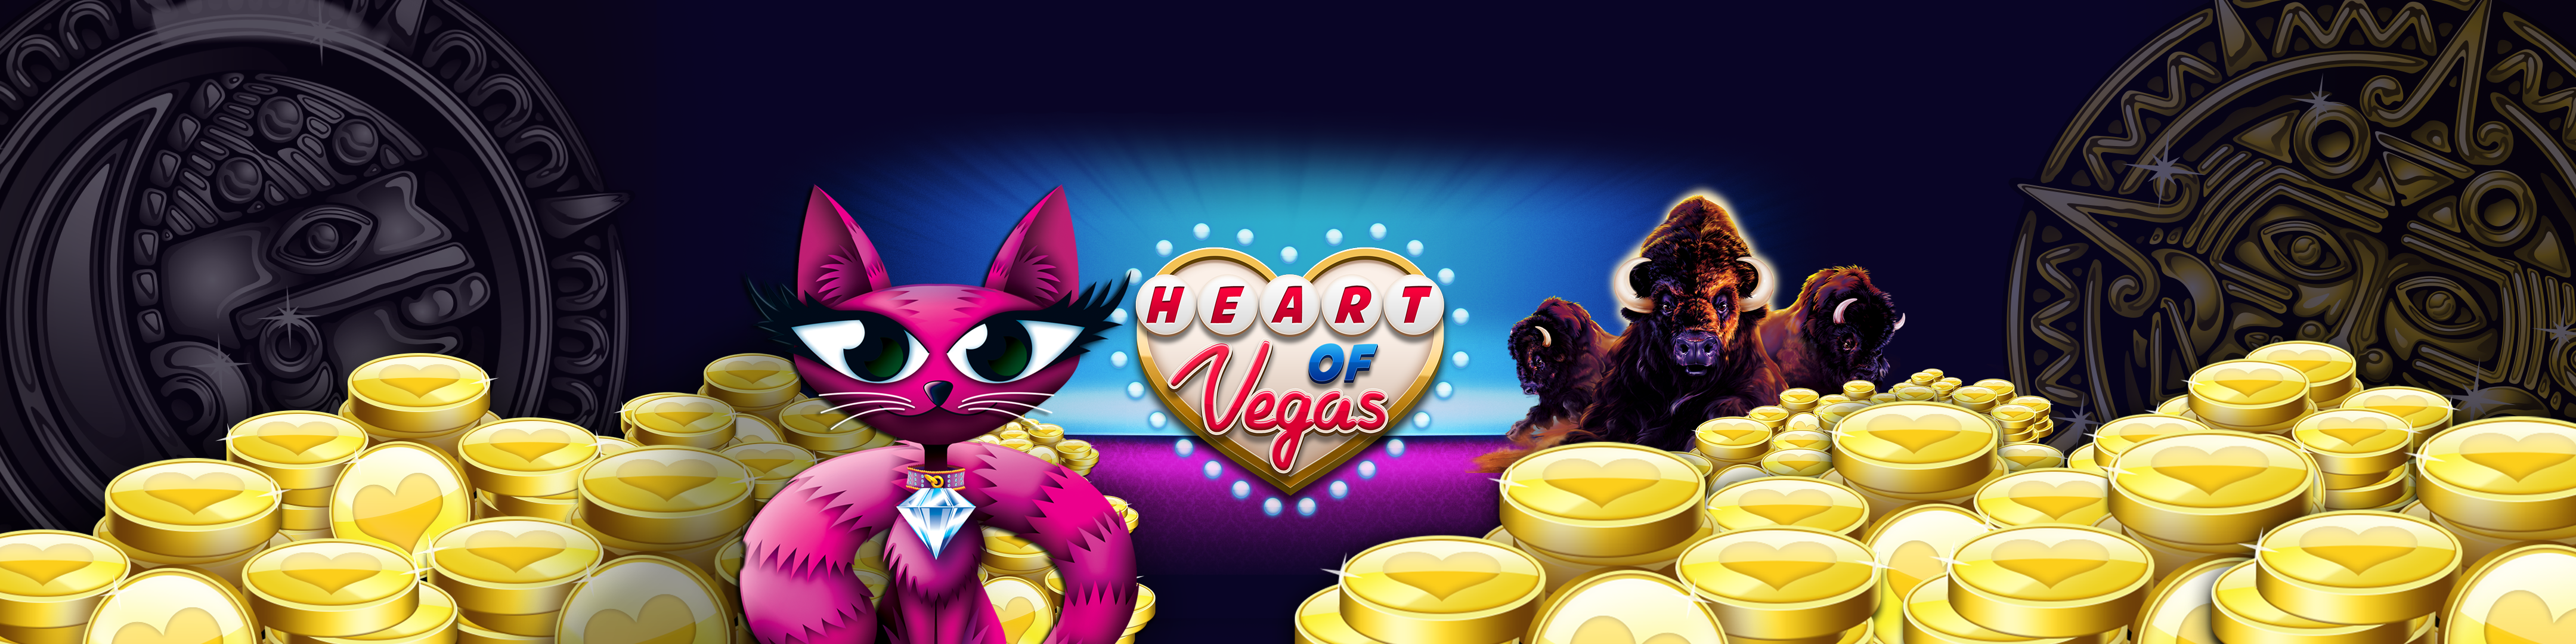 Hearts of vegas casino games